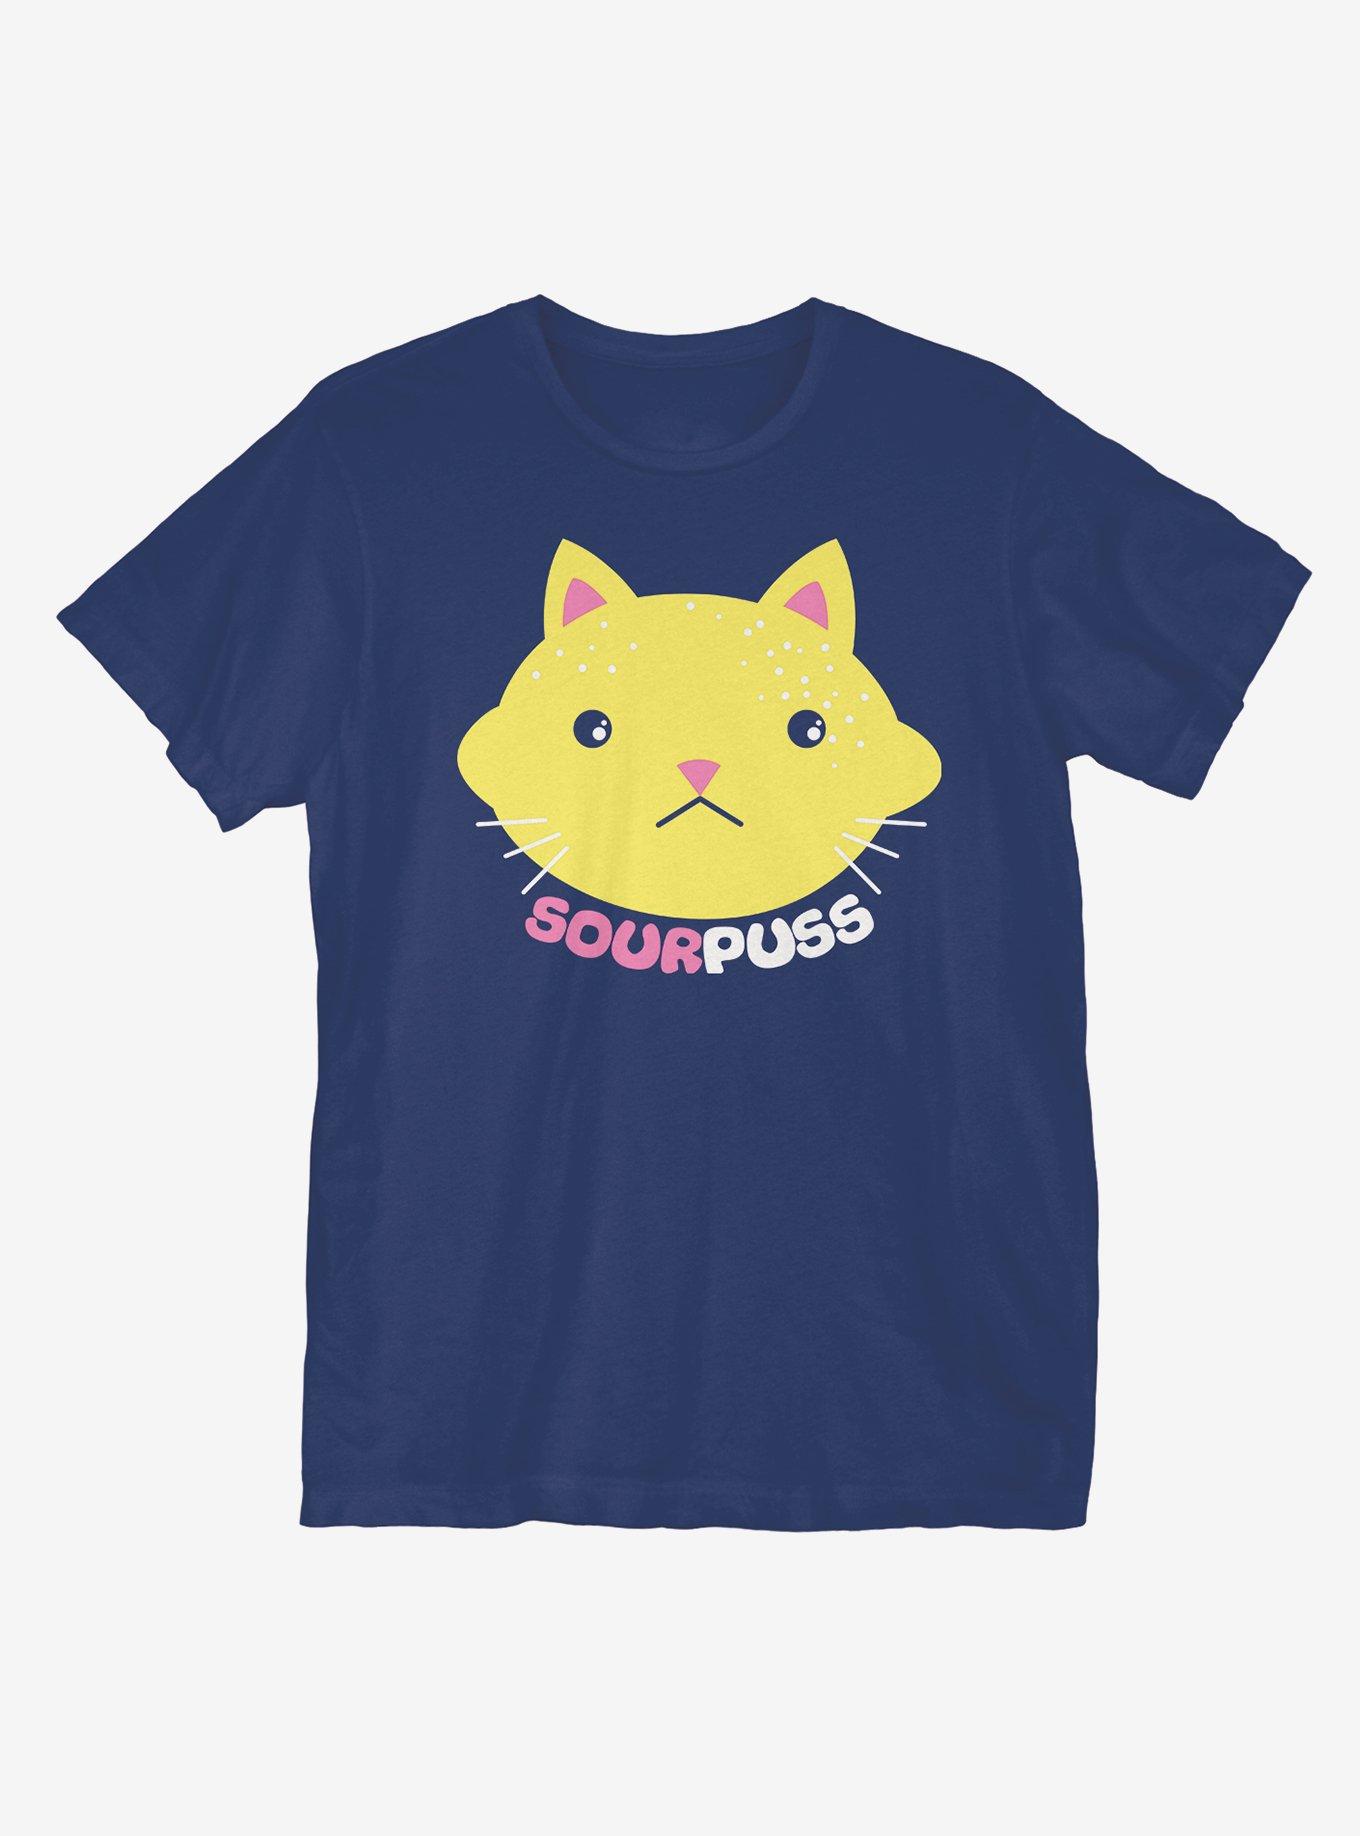 Sourpuss T-Shirt, NAVY, hi-res